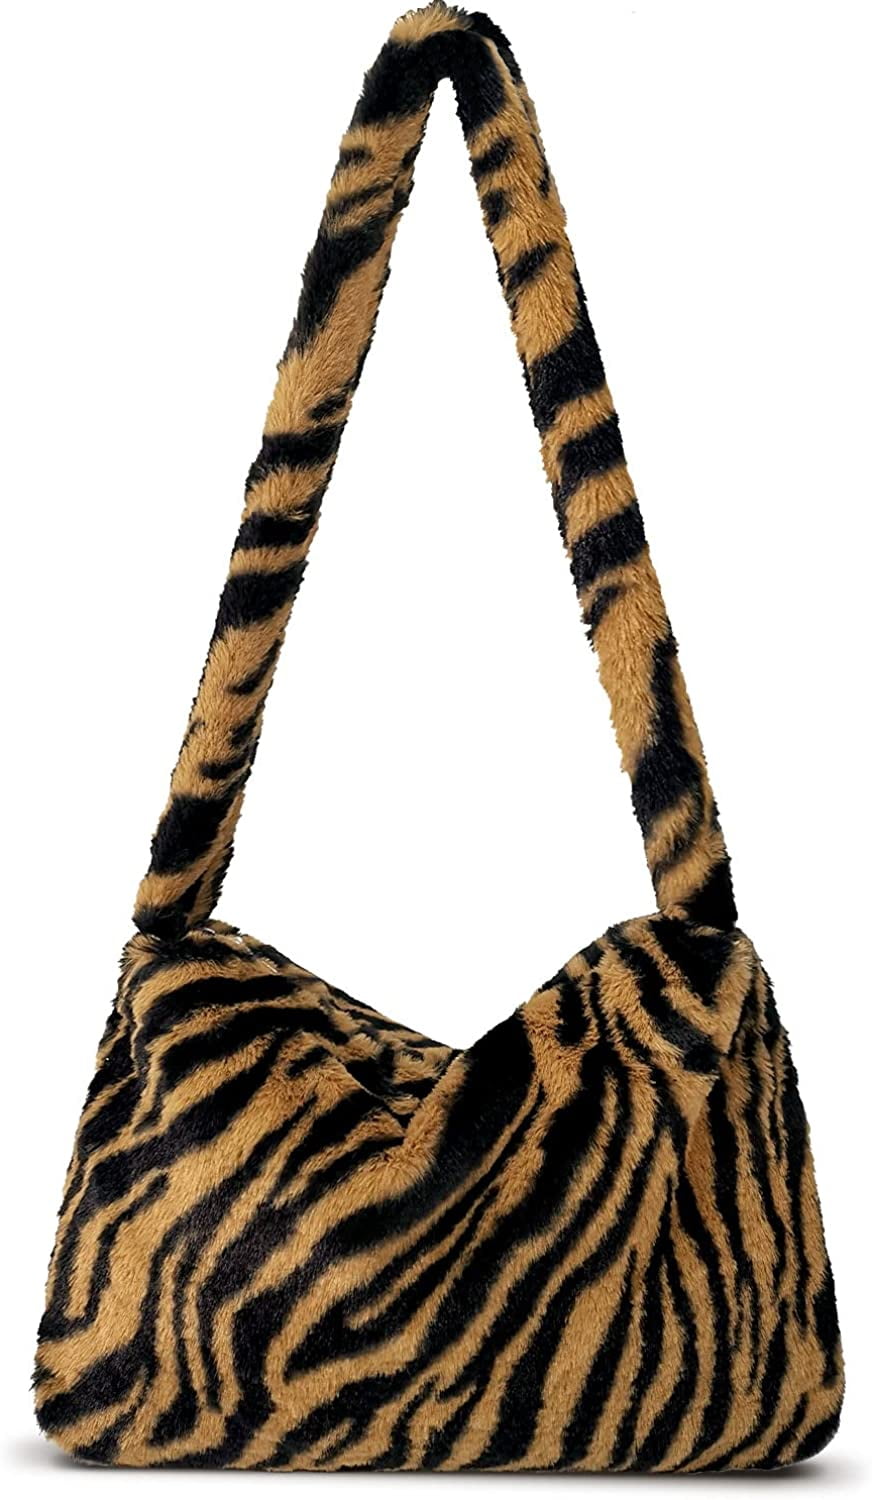 Large Capacity Fuzzy Shoulder Bags For Women Hobo Handbags Fur Handbags Fashion Bags 